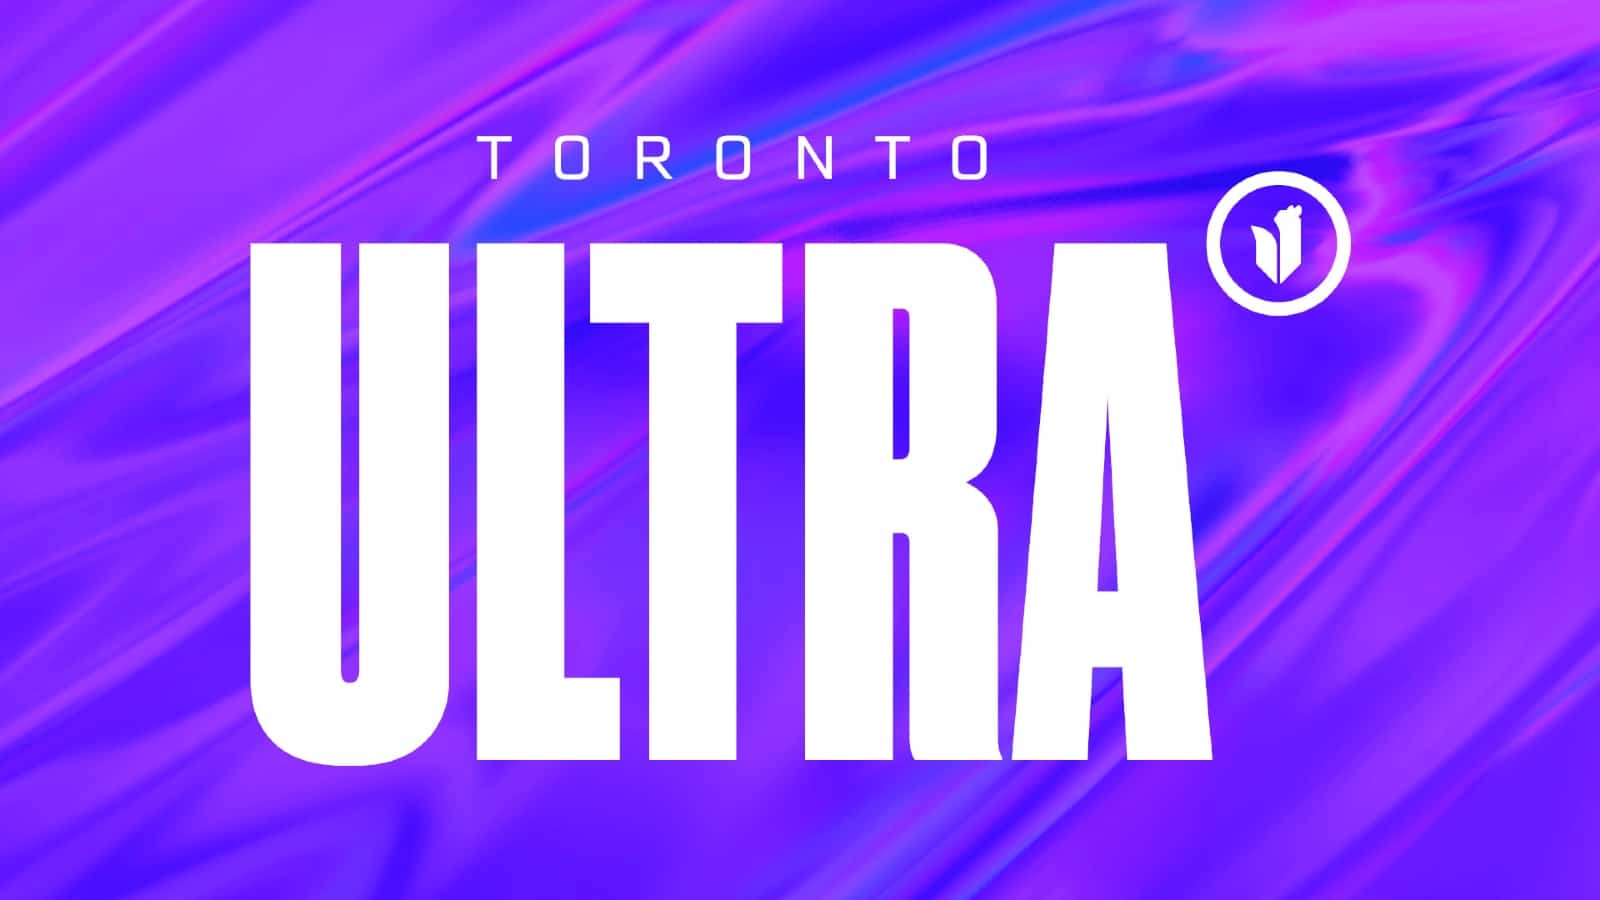 Toronto ultra logo with purple background